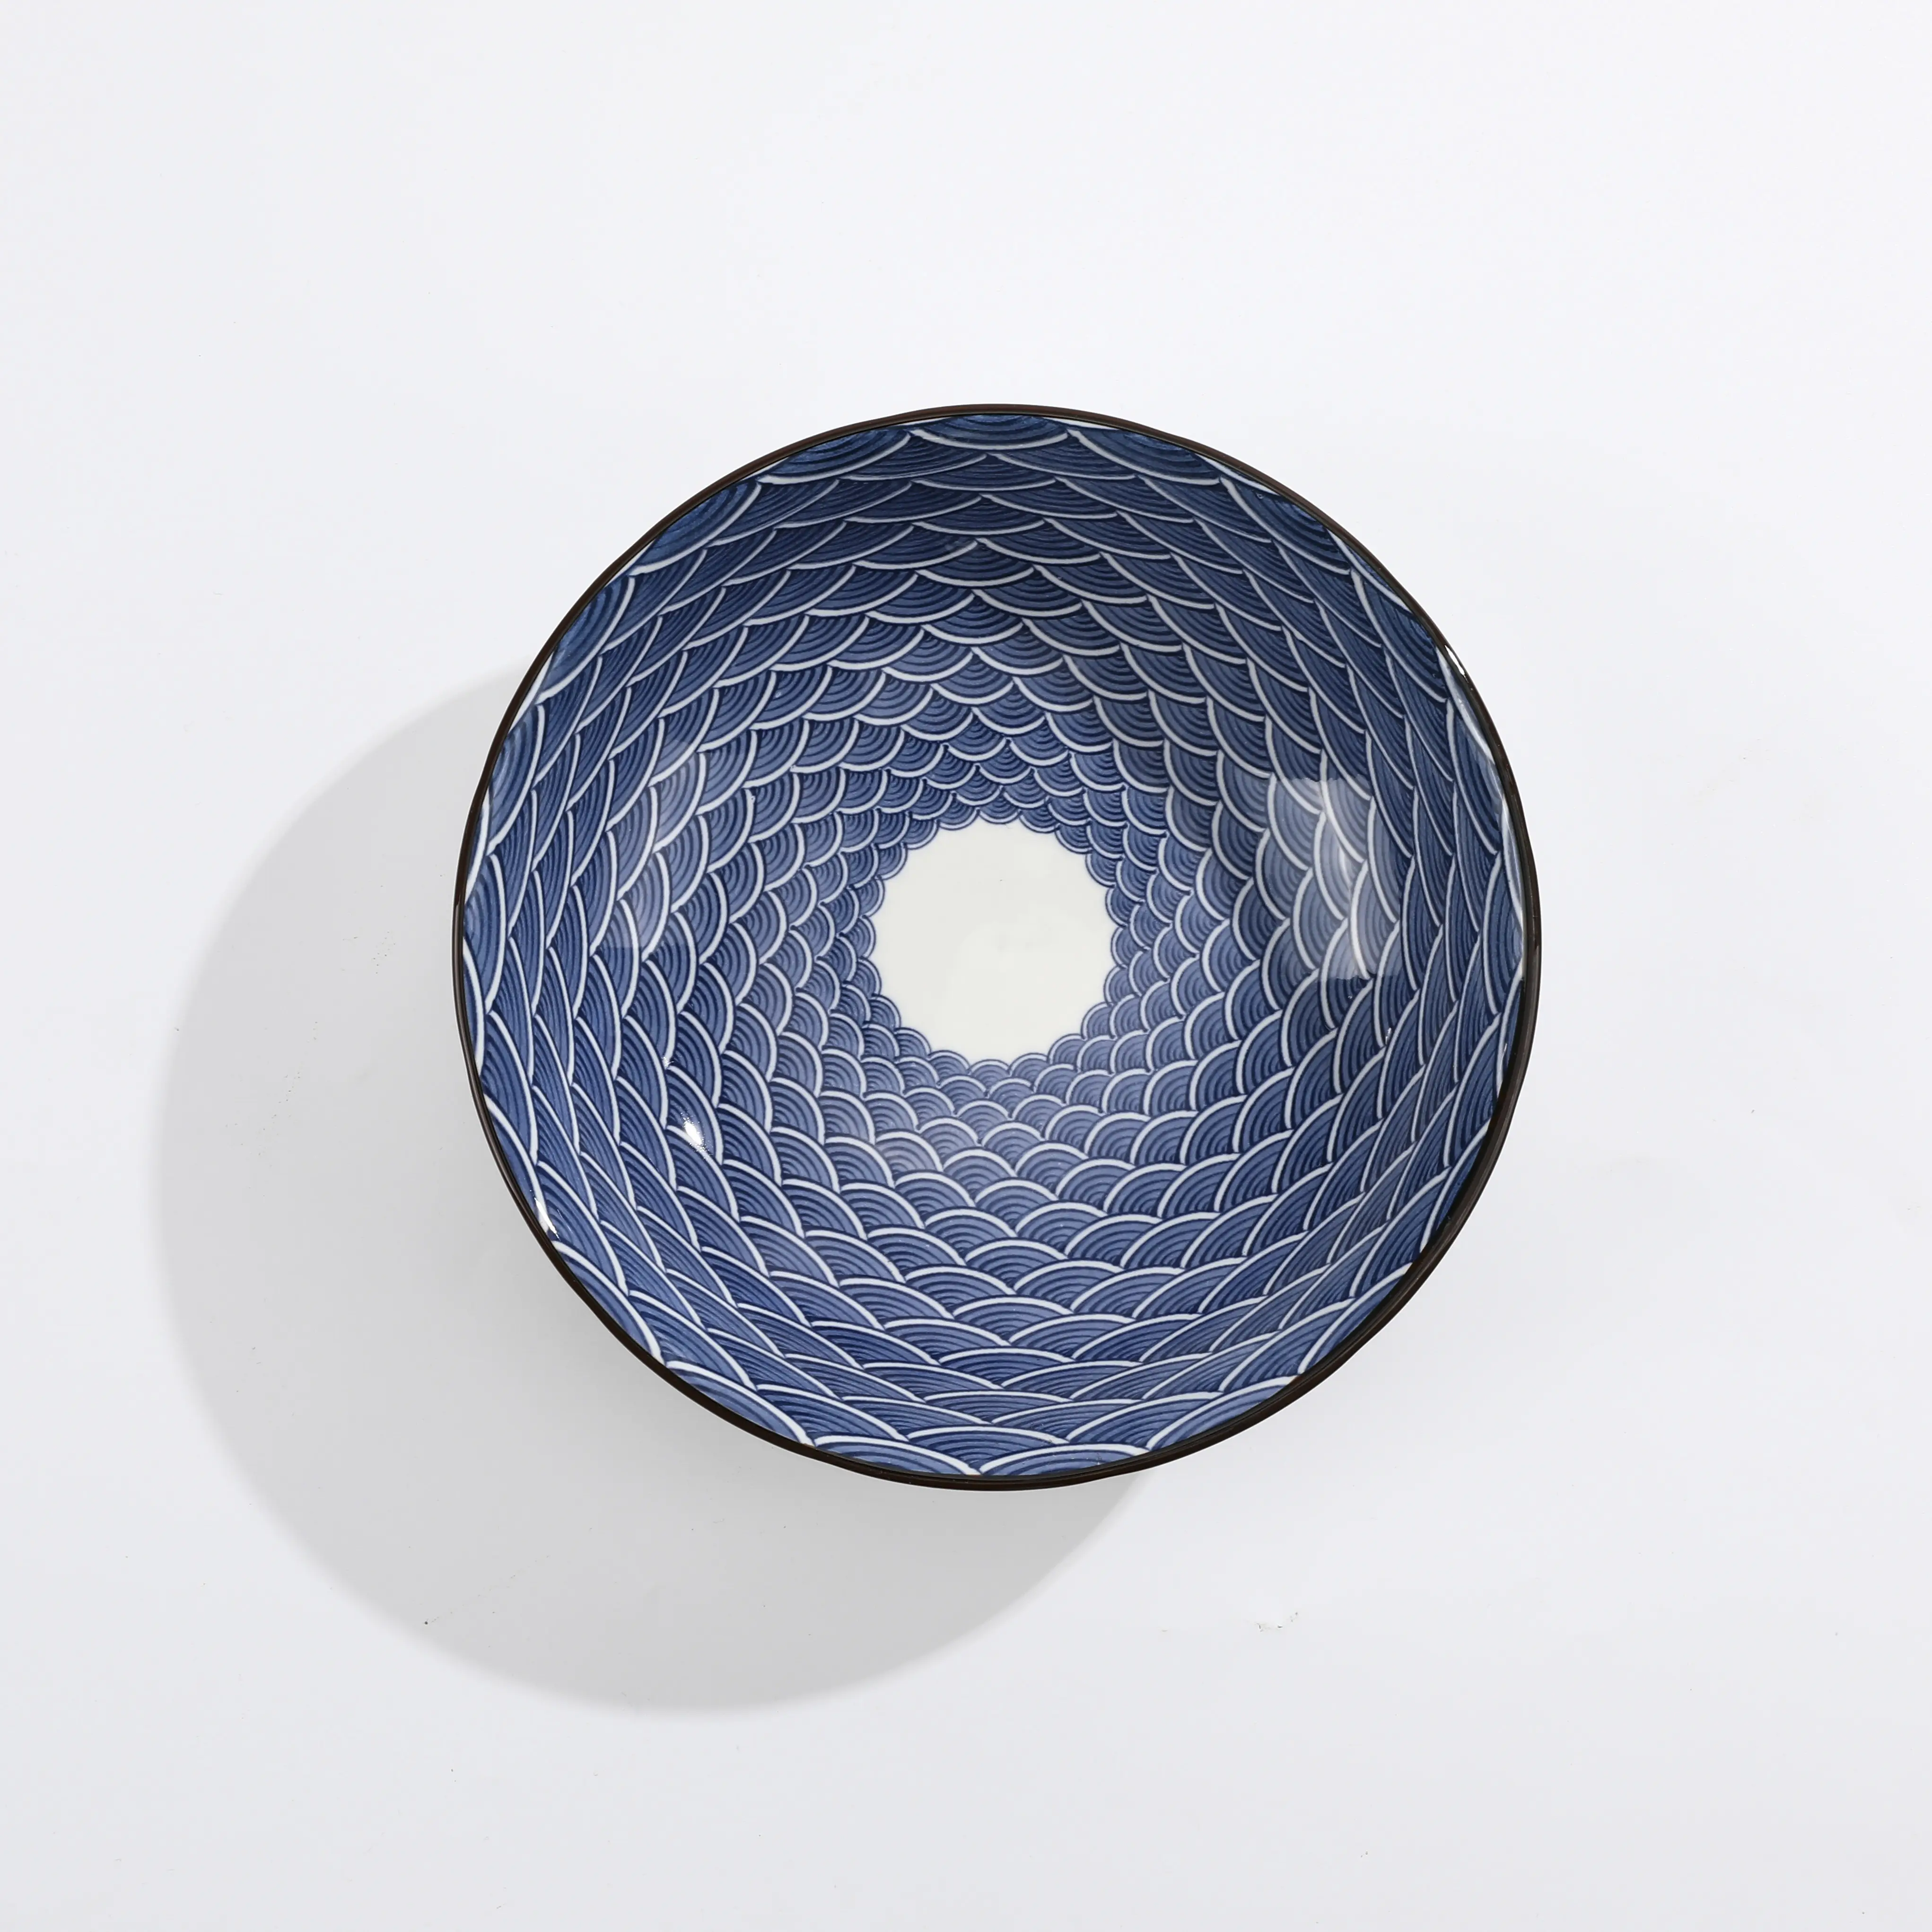 Tivray custom bone china dinnerware set with special pattern design hot trend fine Japanese style ceramic tableware plates set